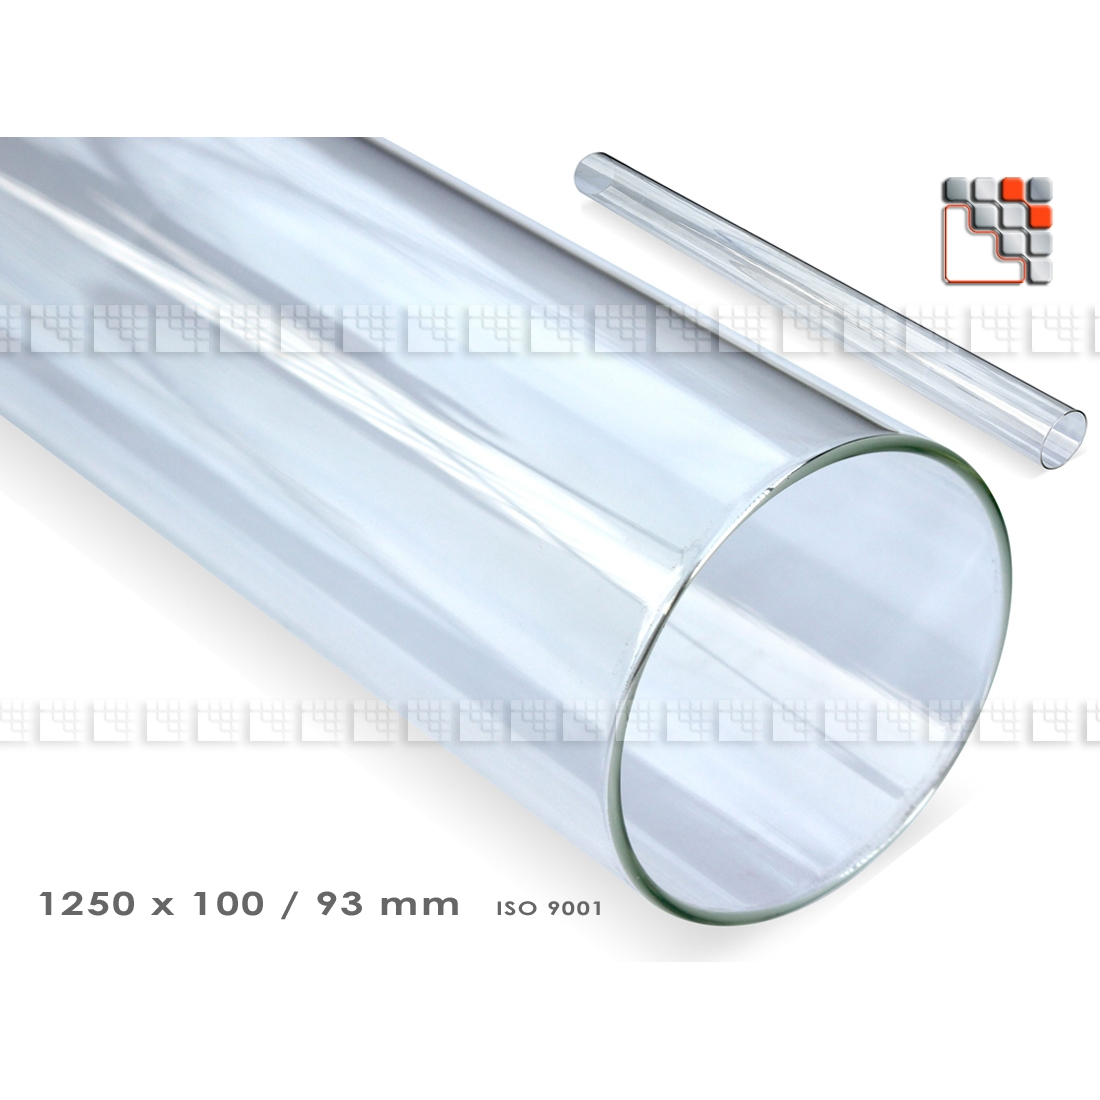 Chauffage au gaz tube en verre pour parasol chauffant Optical Pro 